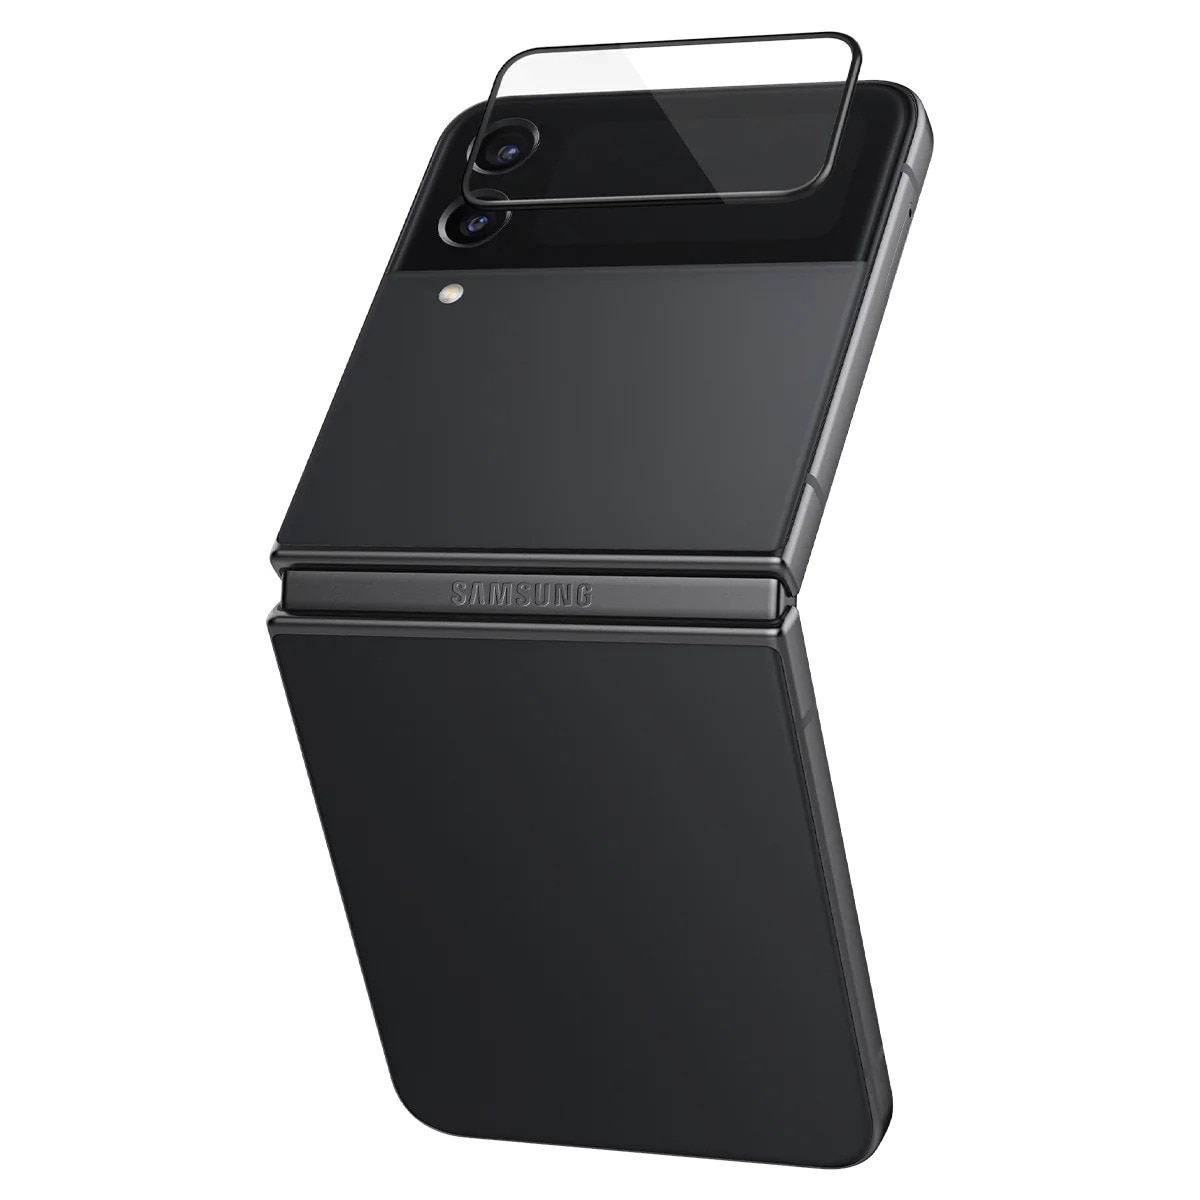 Glas.tR EZ Fit Screen Protector + Hinge Film Samsung Galaxy Z Flip 4 Negro